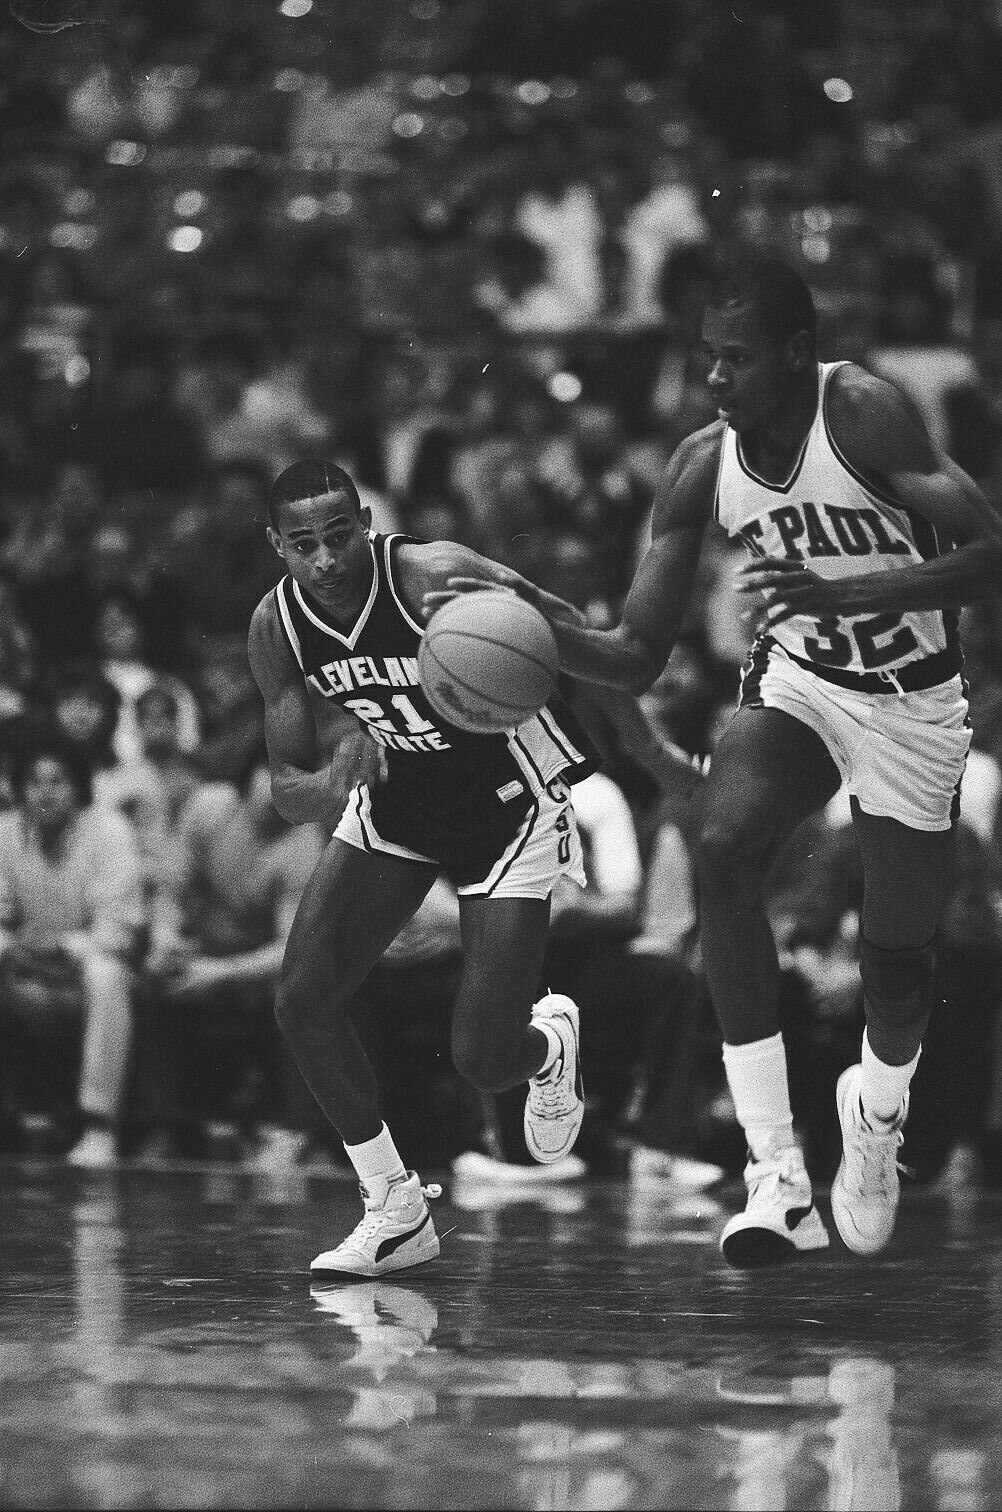 LD125-4 1986 DePaul Cleveland St College Basketball (62) ORIG 35mm B&W NEGATIVES Без бренда - фотография #3